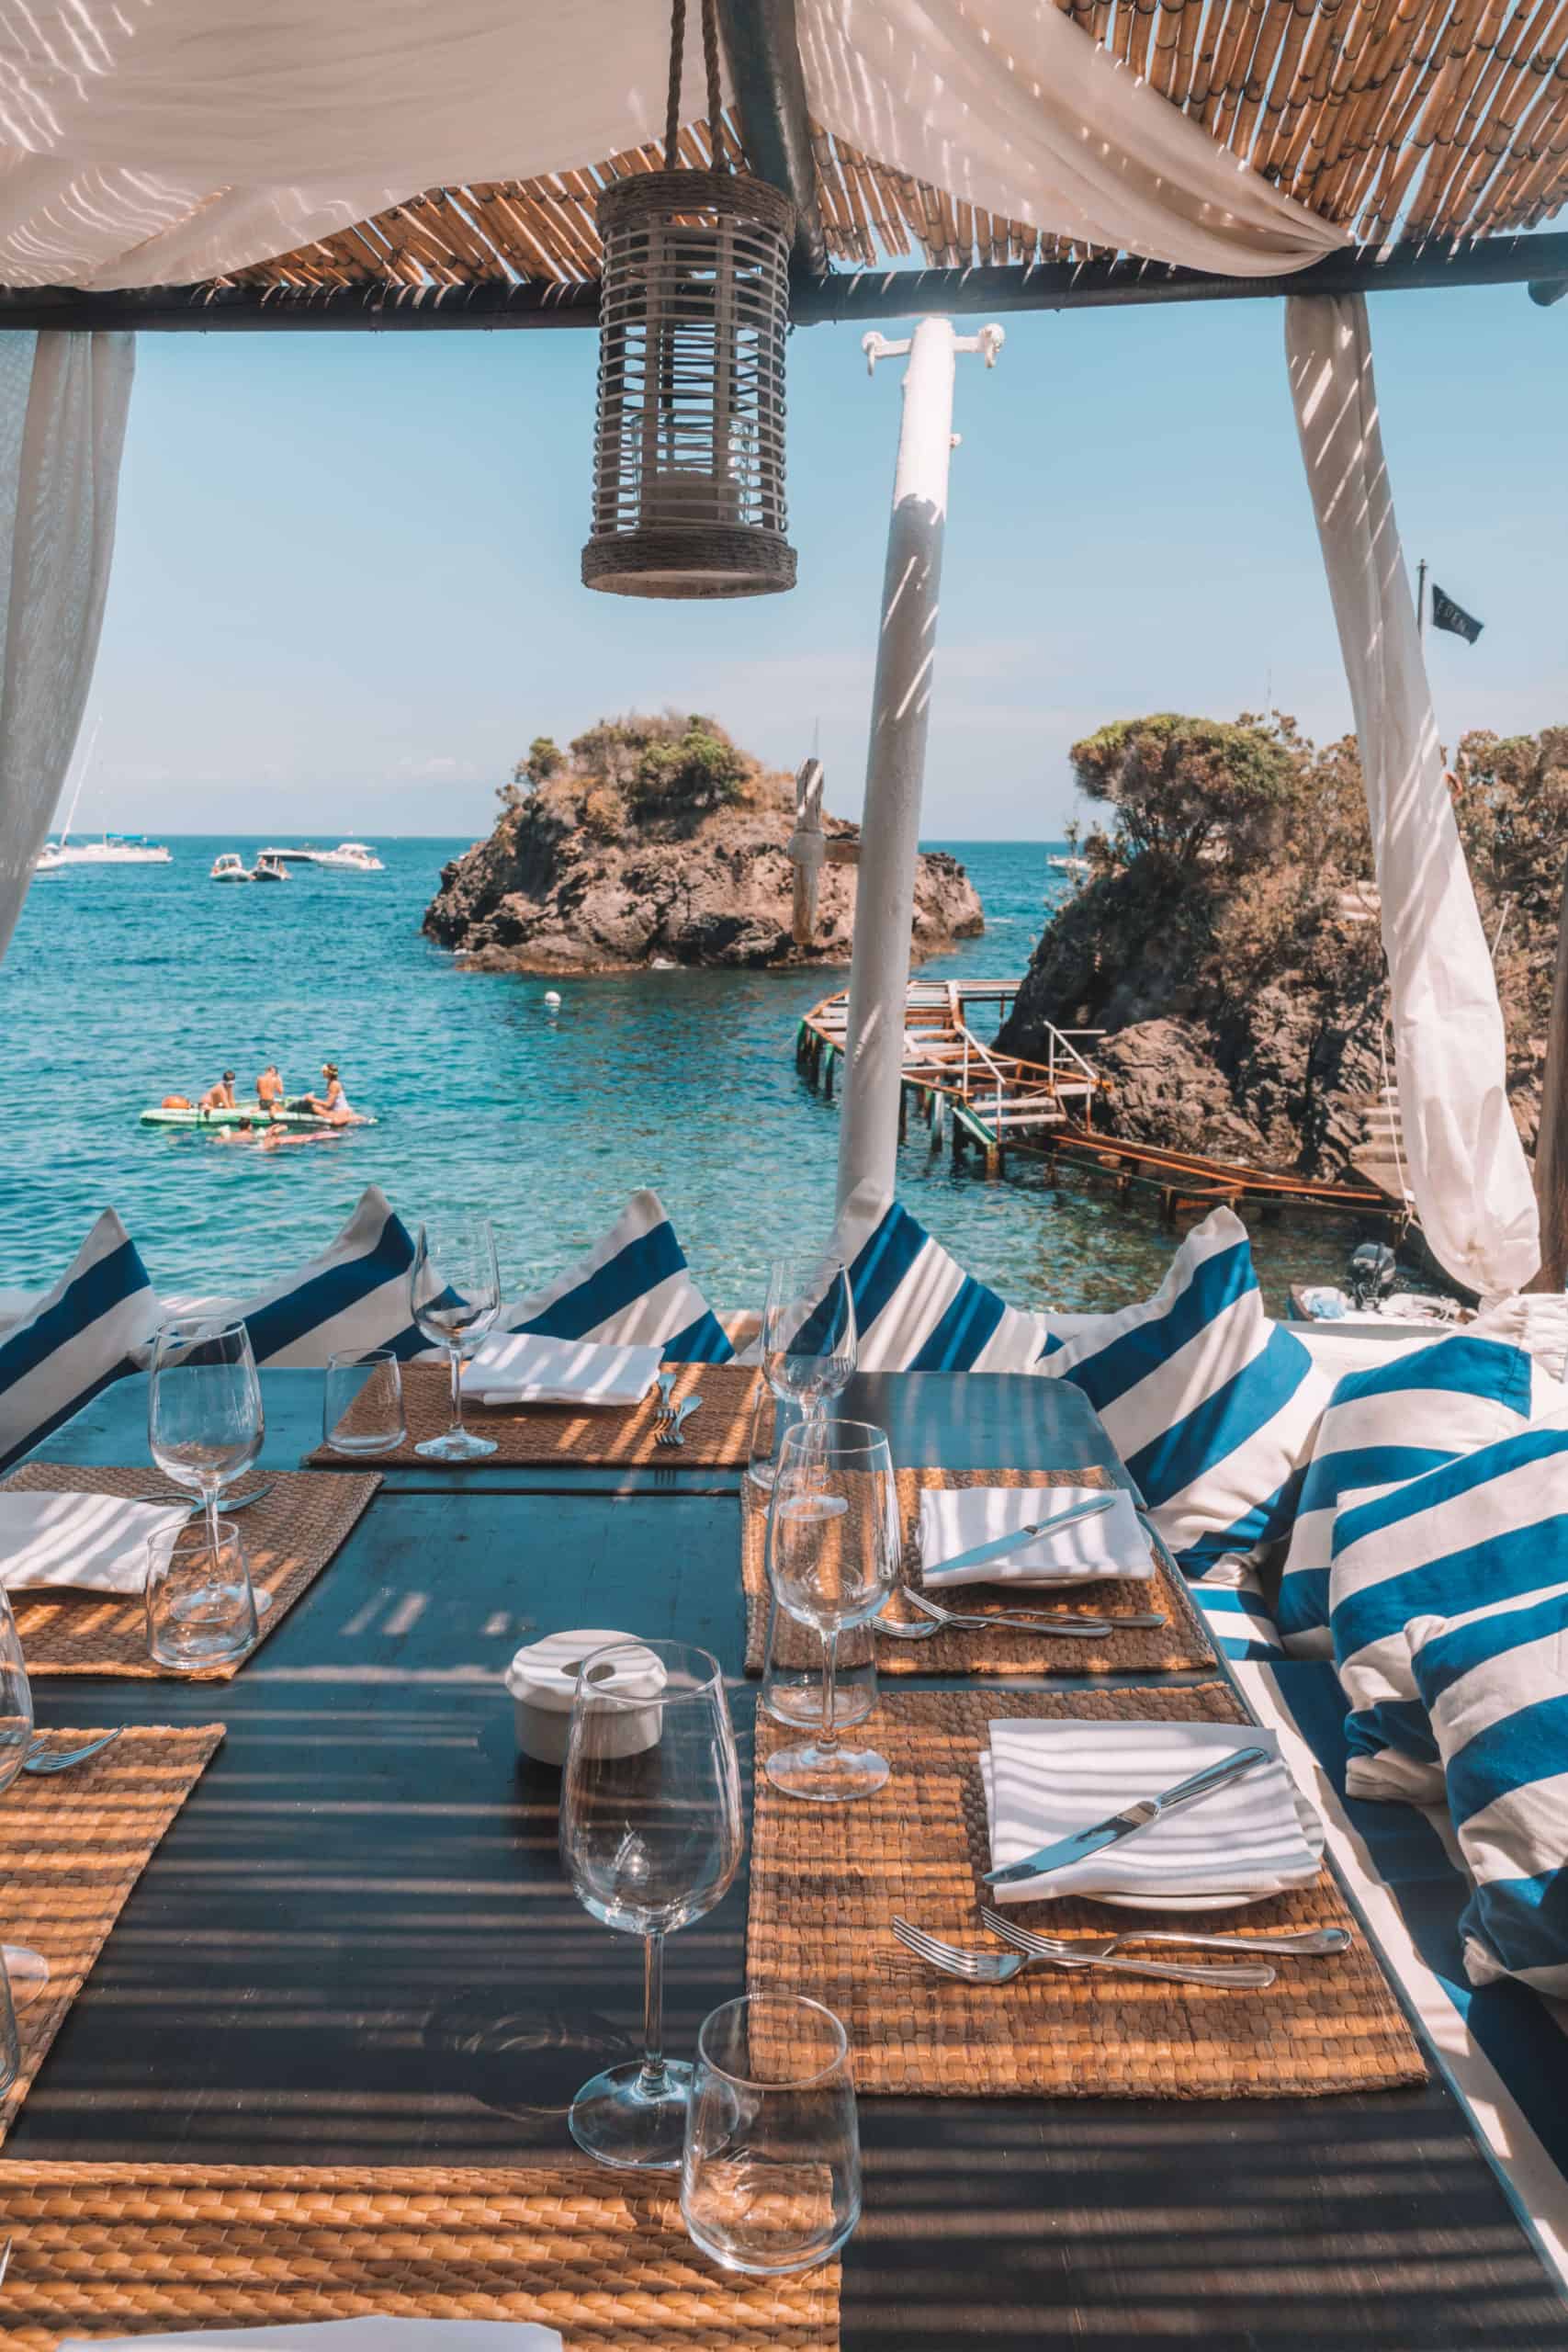 Lunch views from Giardino Eden beach club on Ischia island in Italy